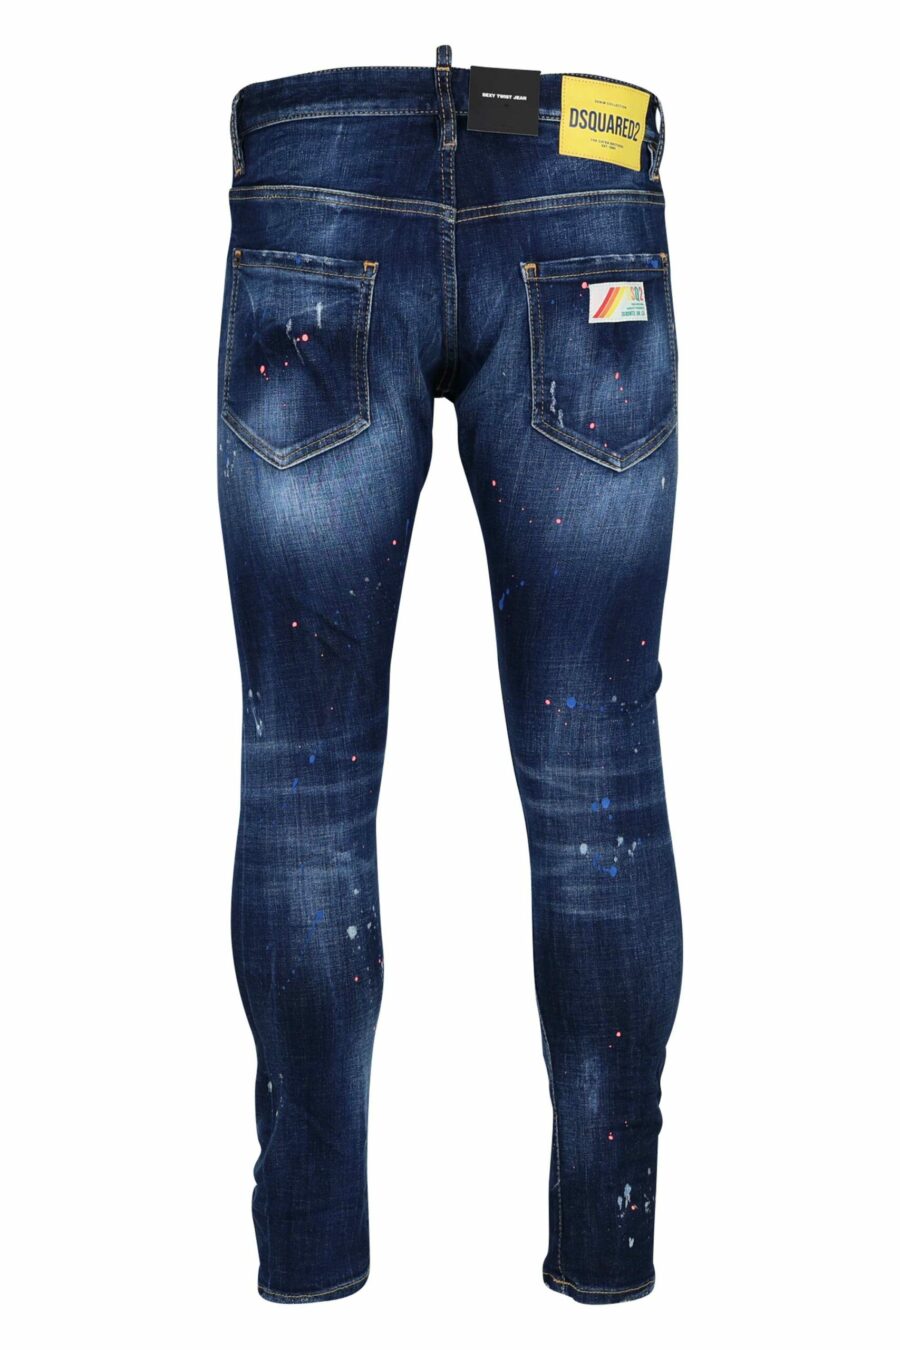 Blue "sexy twist jean" jeans worn with orange paint - 8054148308292 2 scaled